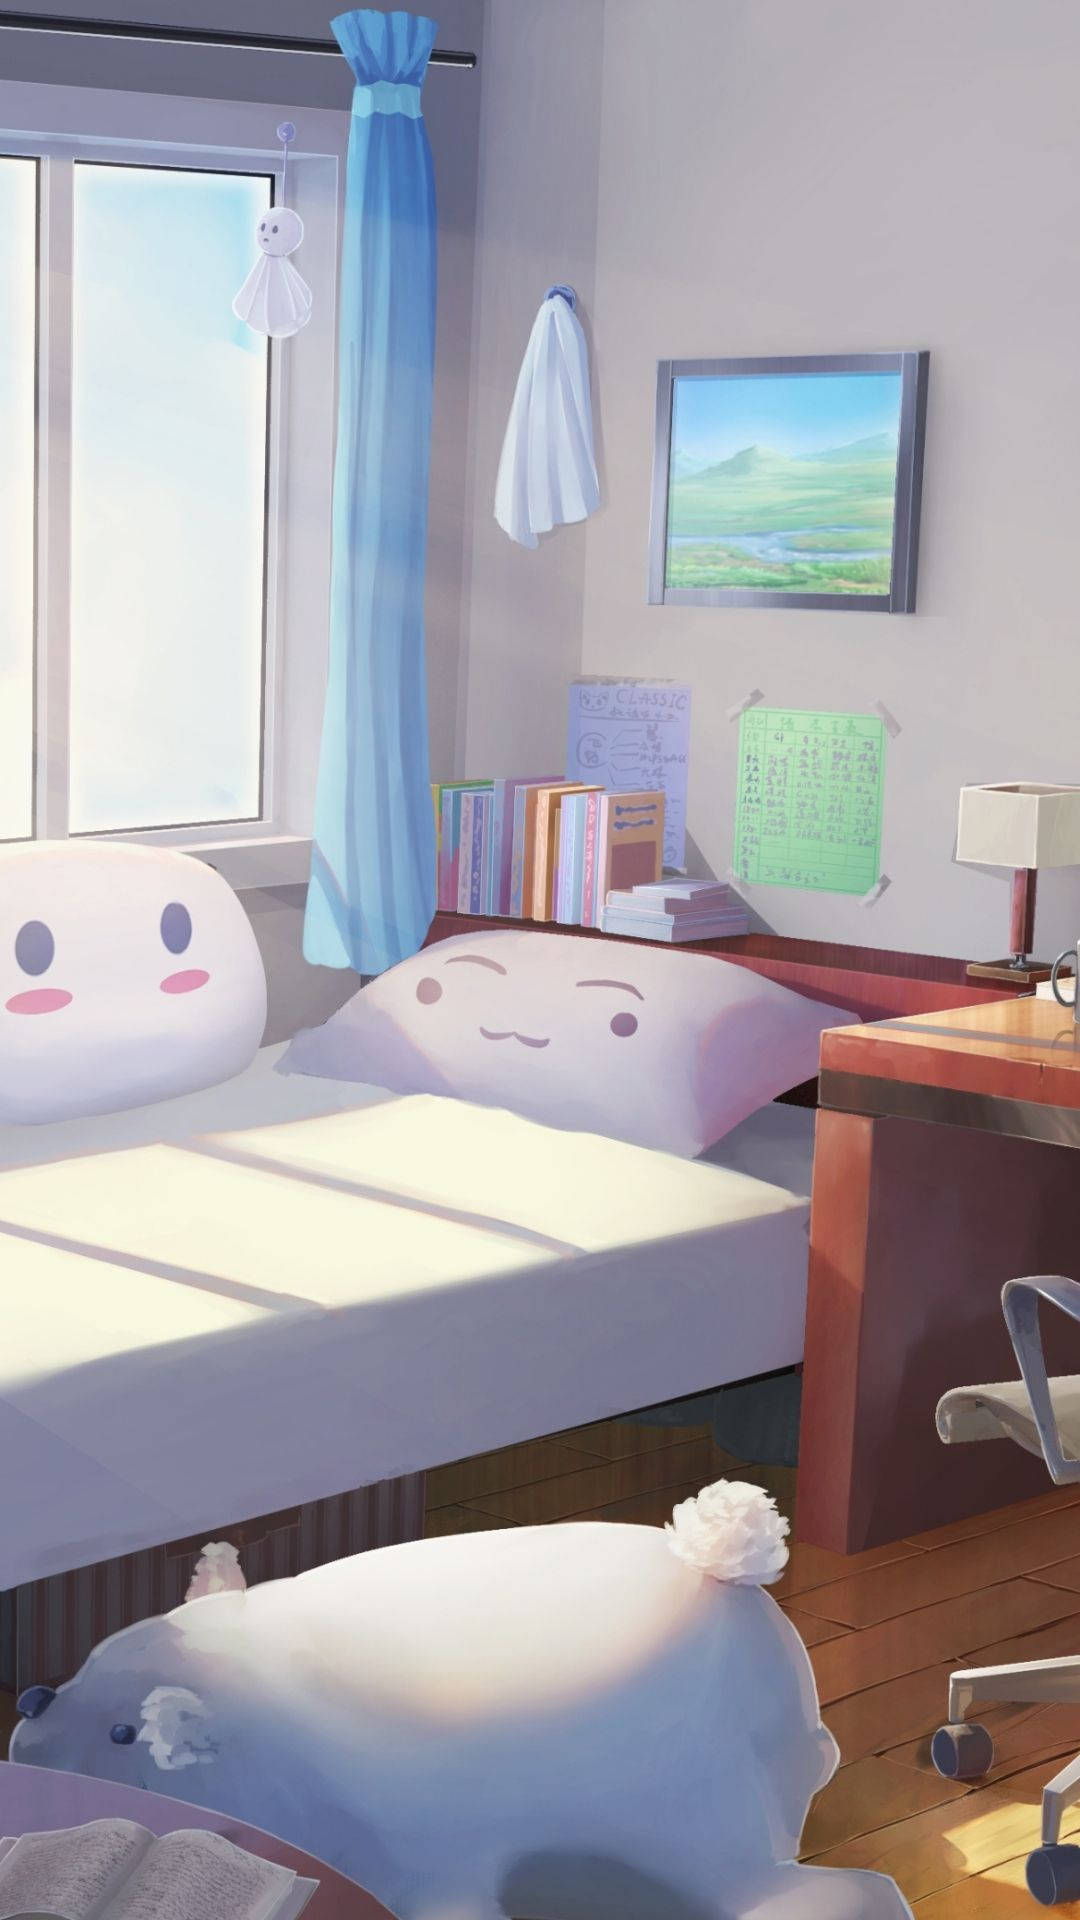 Creative Room Anime on Background - Stock Image - Everypixel